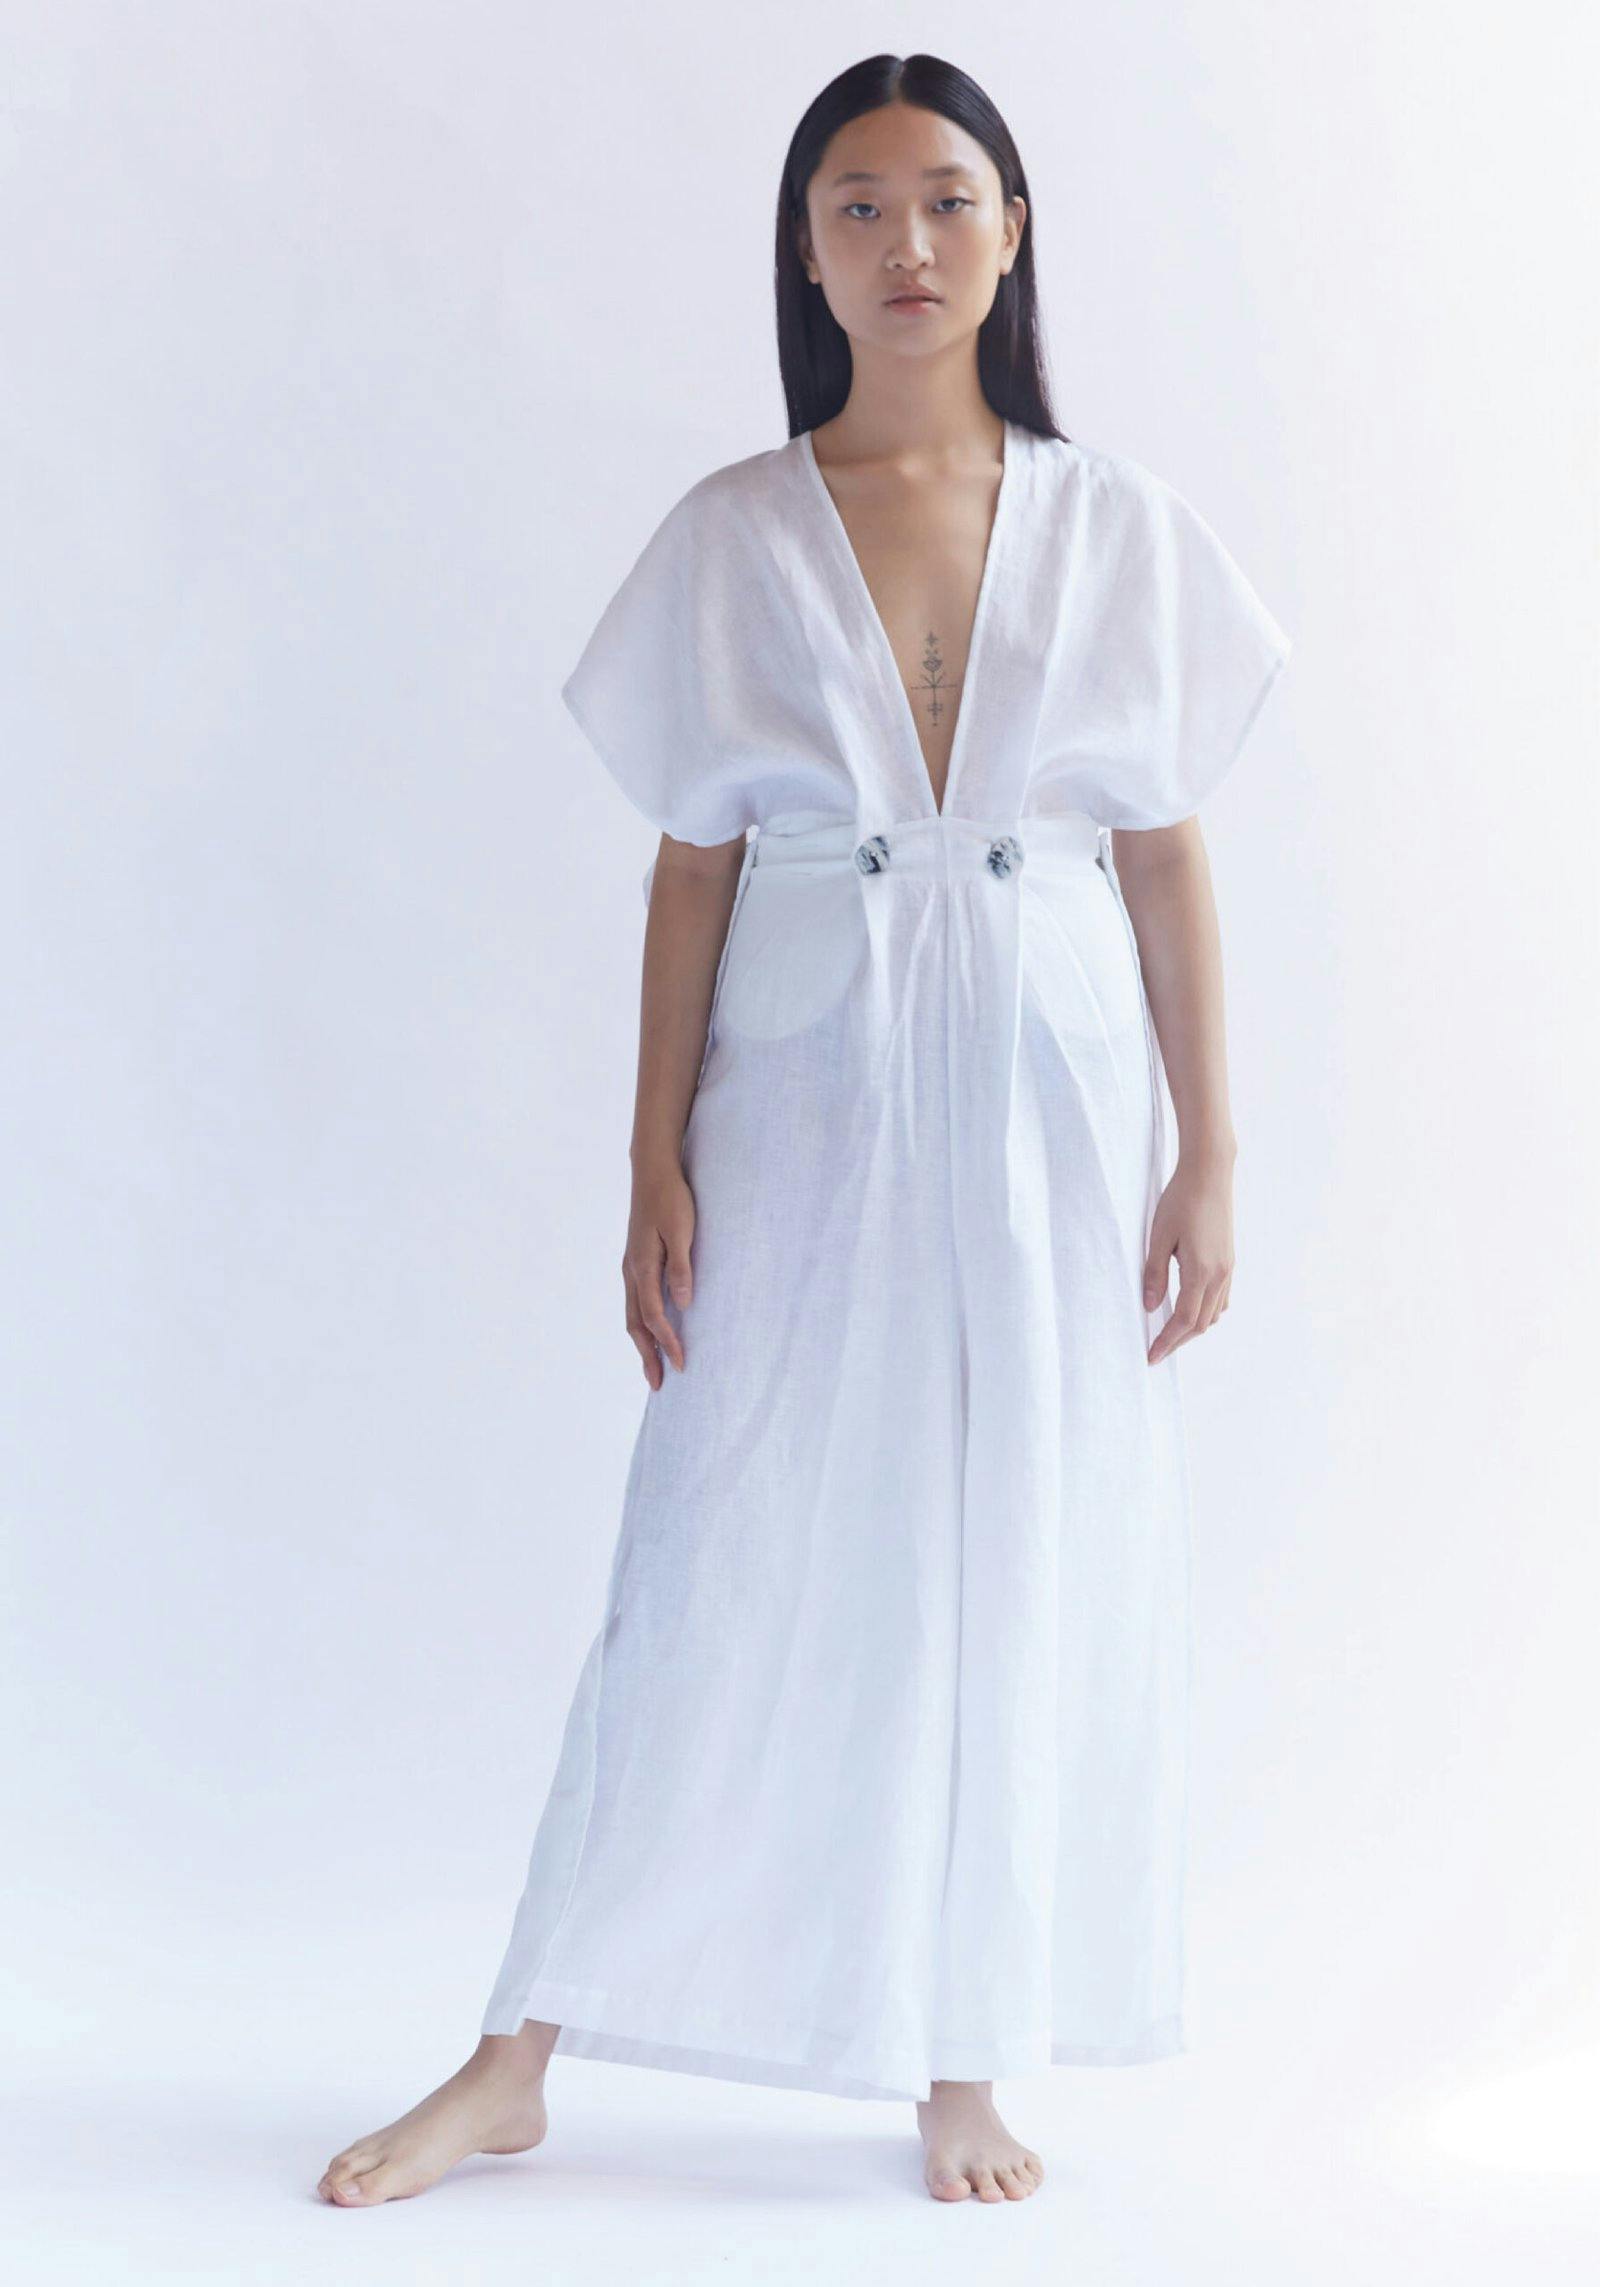 White Monosuit: Item 003 White, a product by Studio cumbre